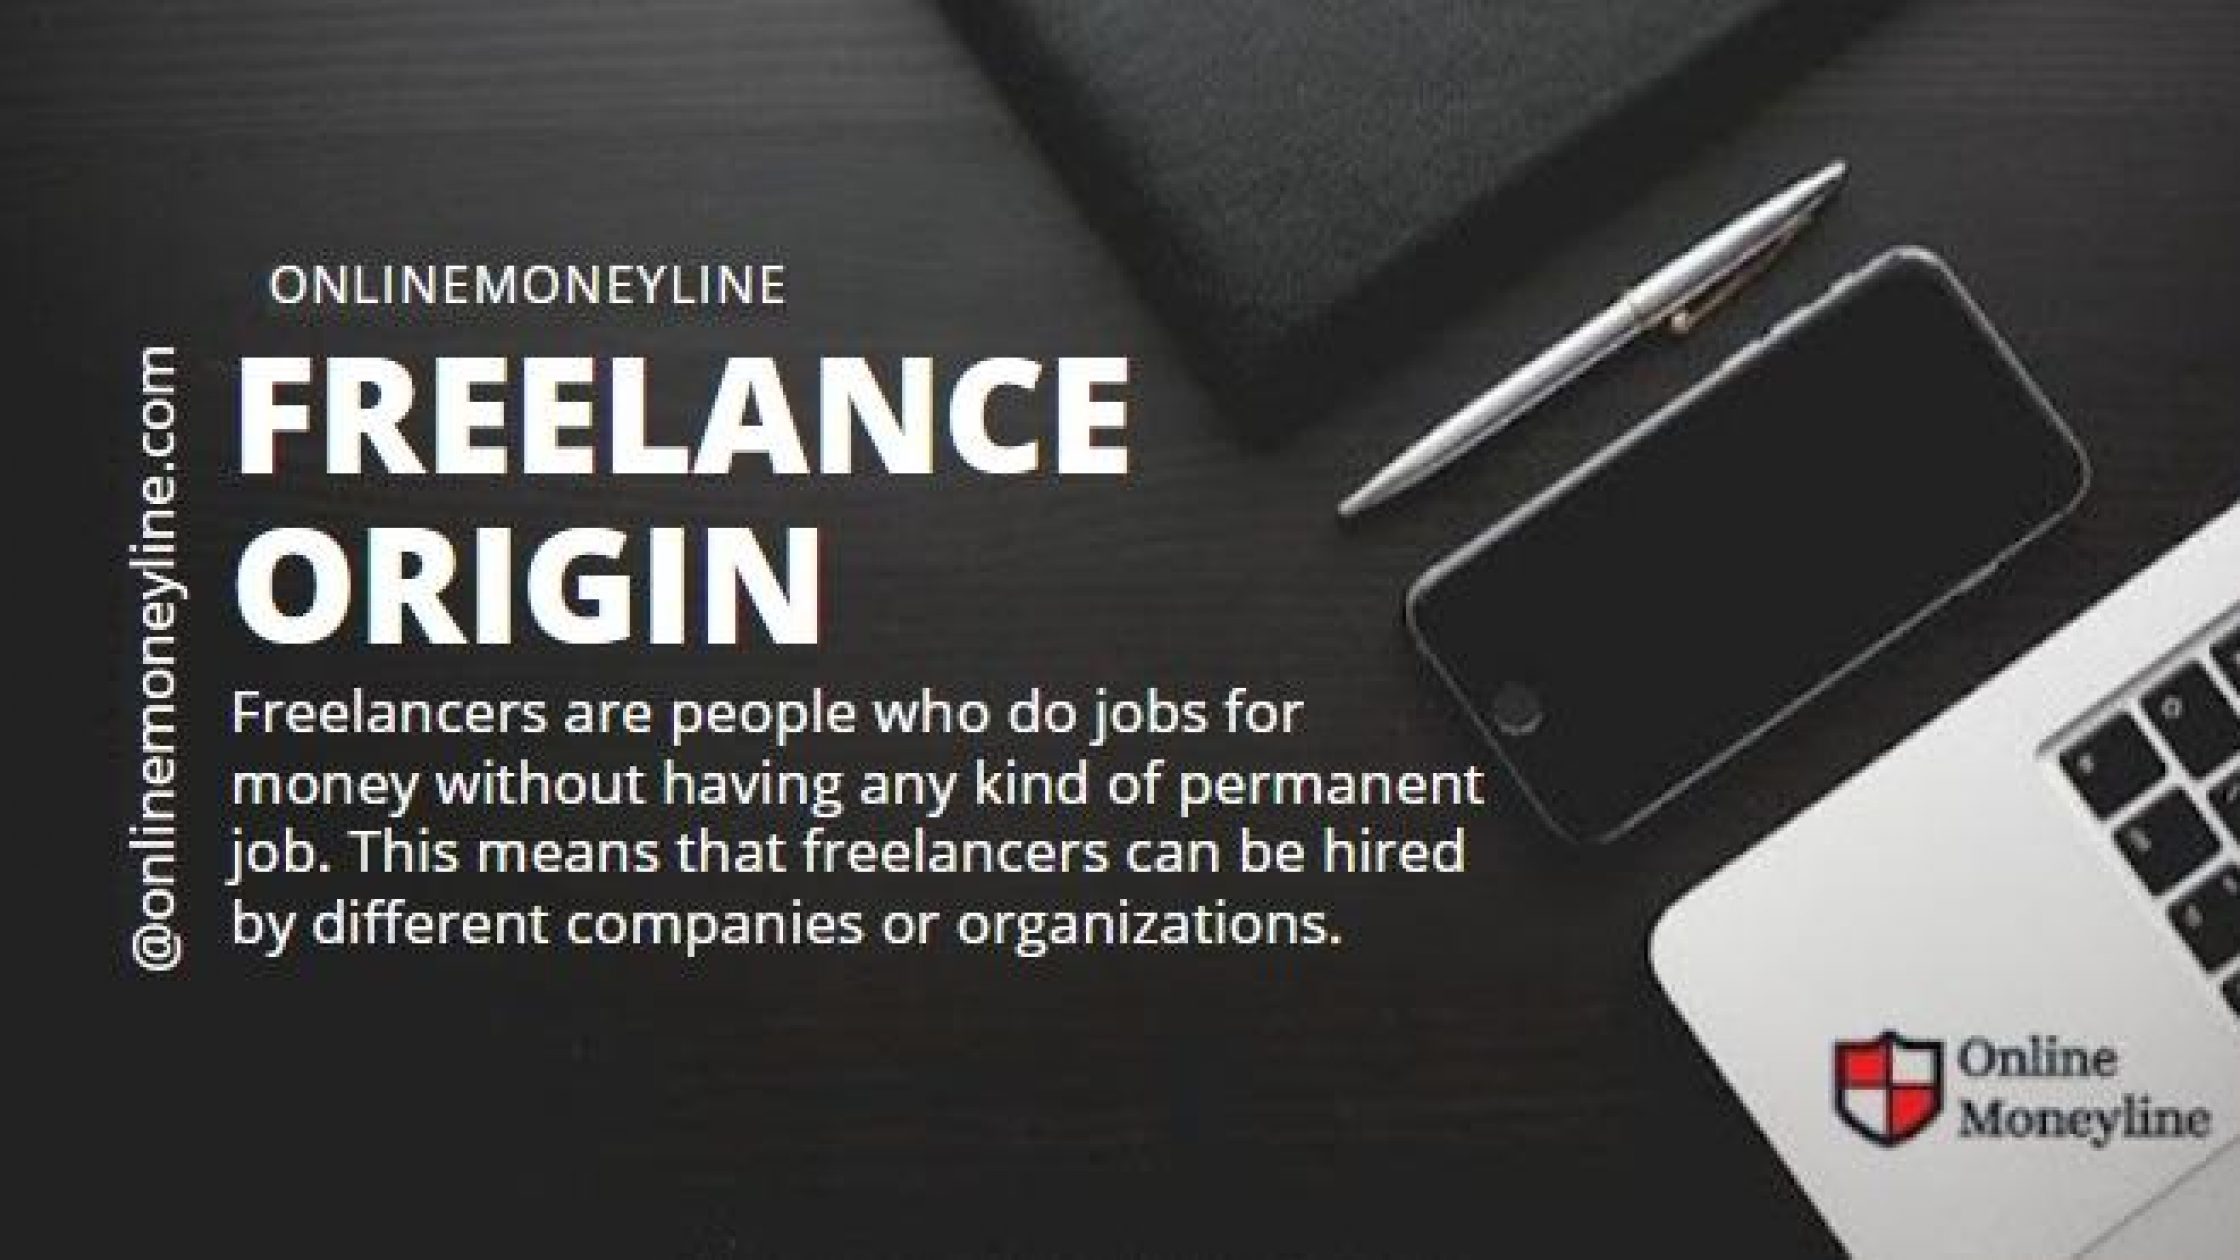 Freelance Origin